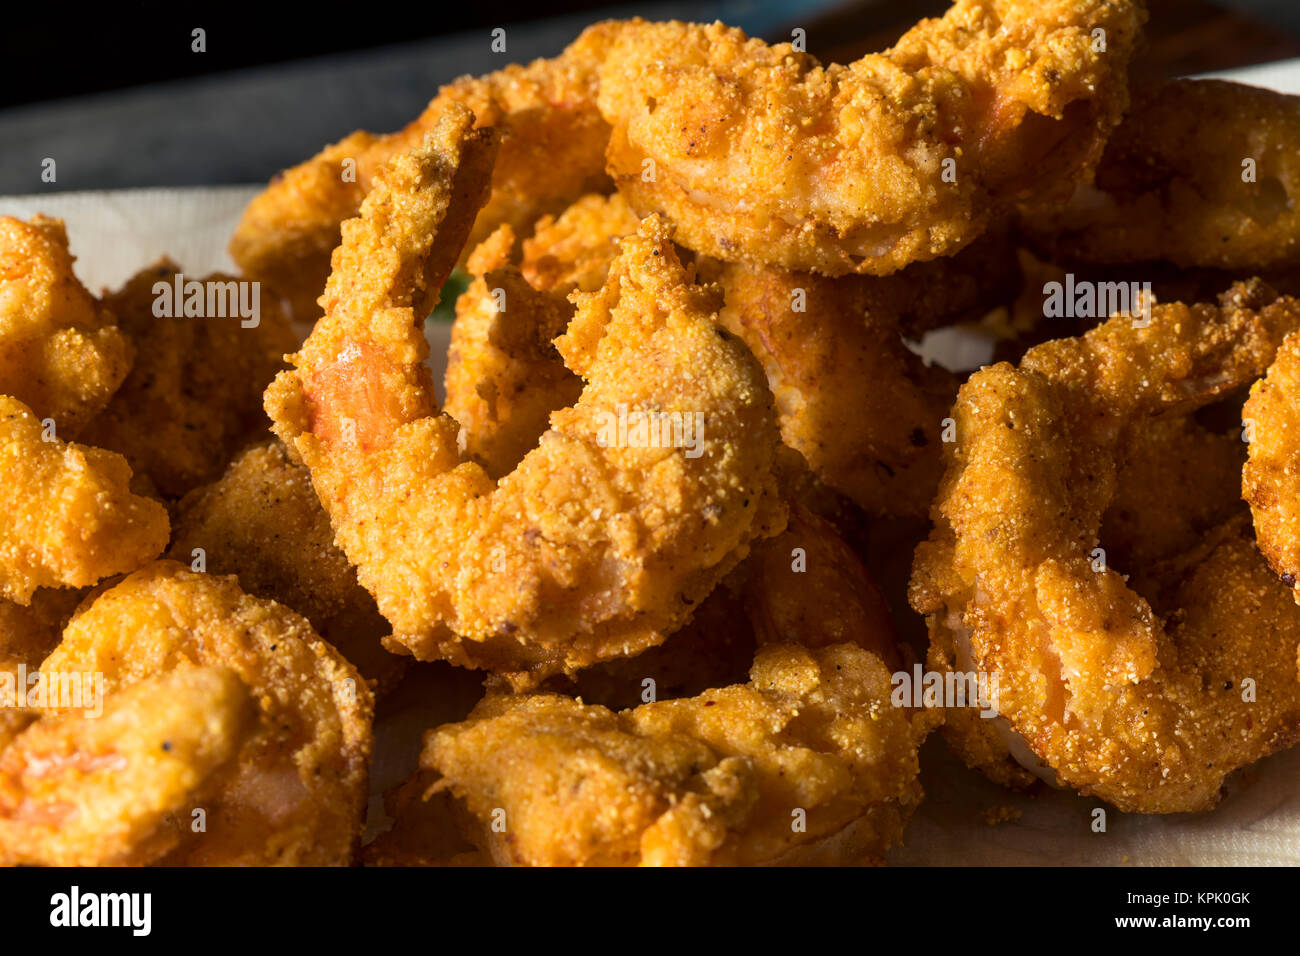 https://c8.alamy.com/comp/KPK0GK/homemade-southern-fried-cajun-shrimp-with-ramoulade-KPK0GK.jpg